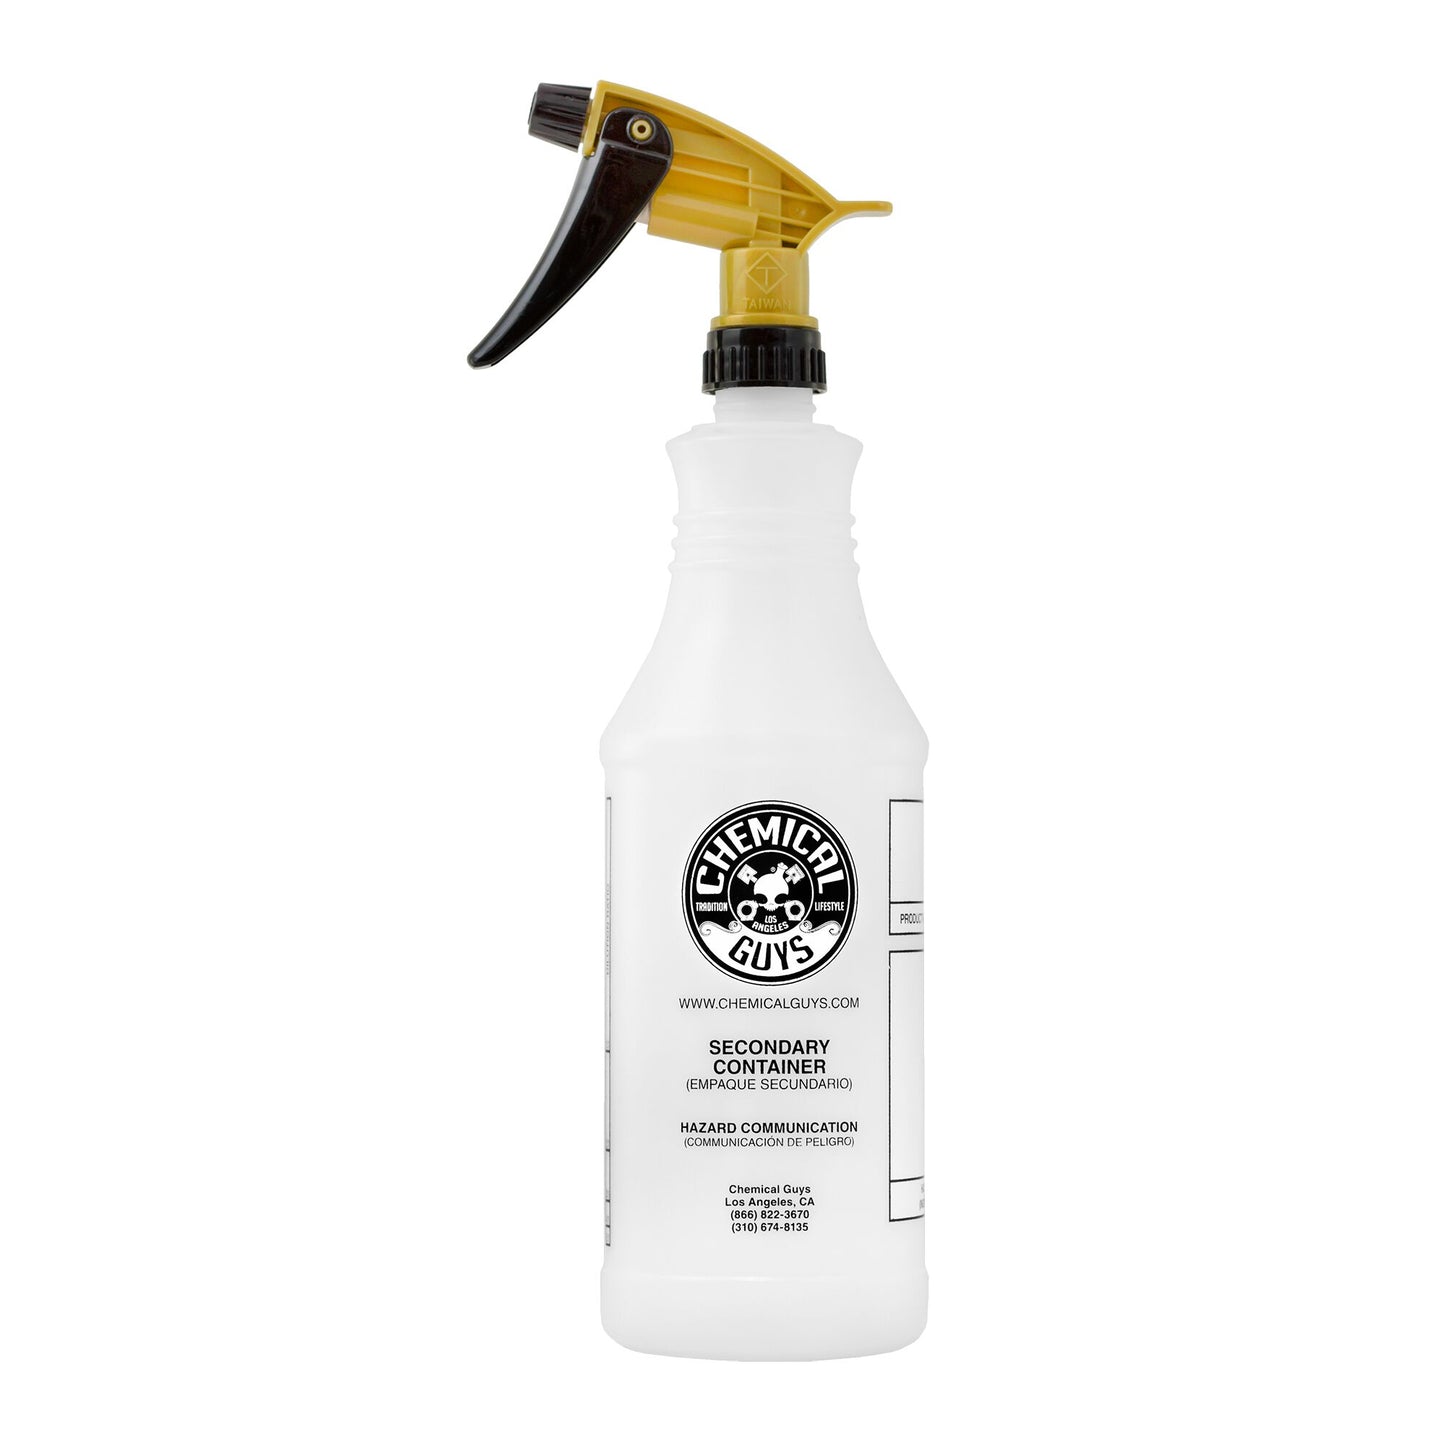 Tolco Gold Standard Heavy Duty Acid Resistant Sprayer